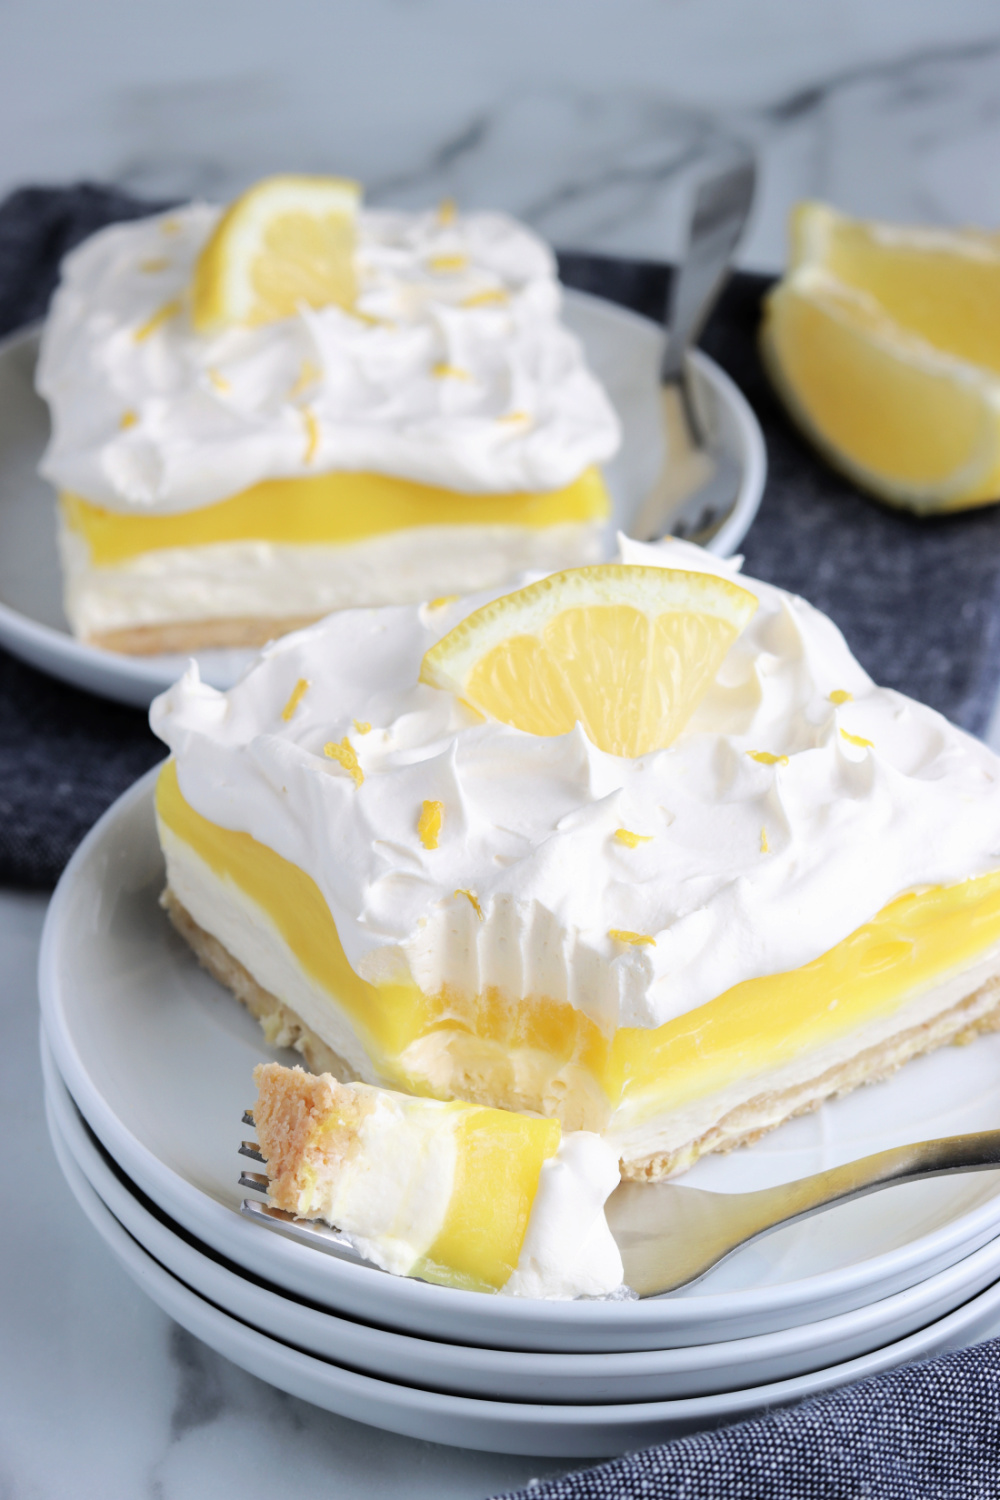 two pieces of lemon lush cake on plates